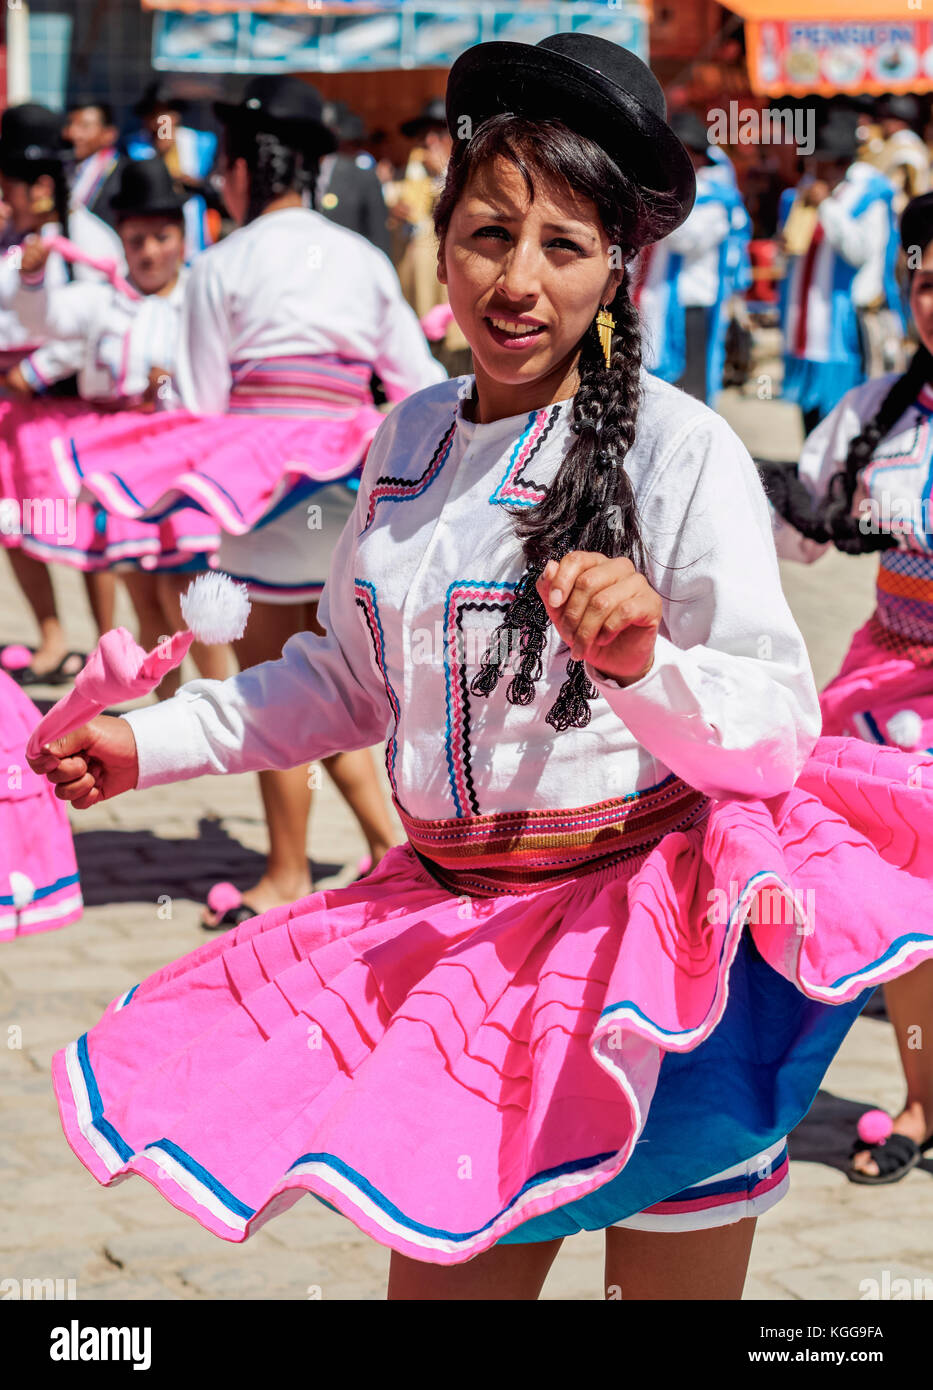 Dancer in Traditional Costume, Fiesta de la Virgen de la Candelaria, Copacabana, La Paz Department, Bolivia Stock Photo